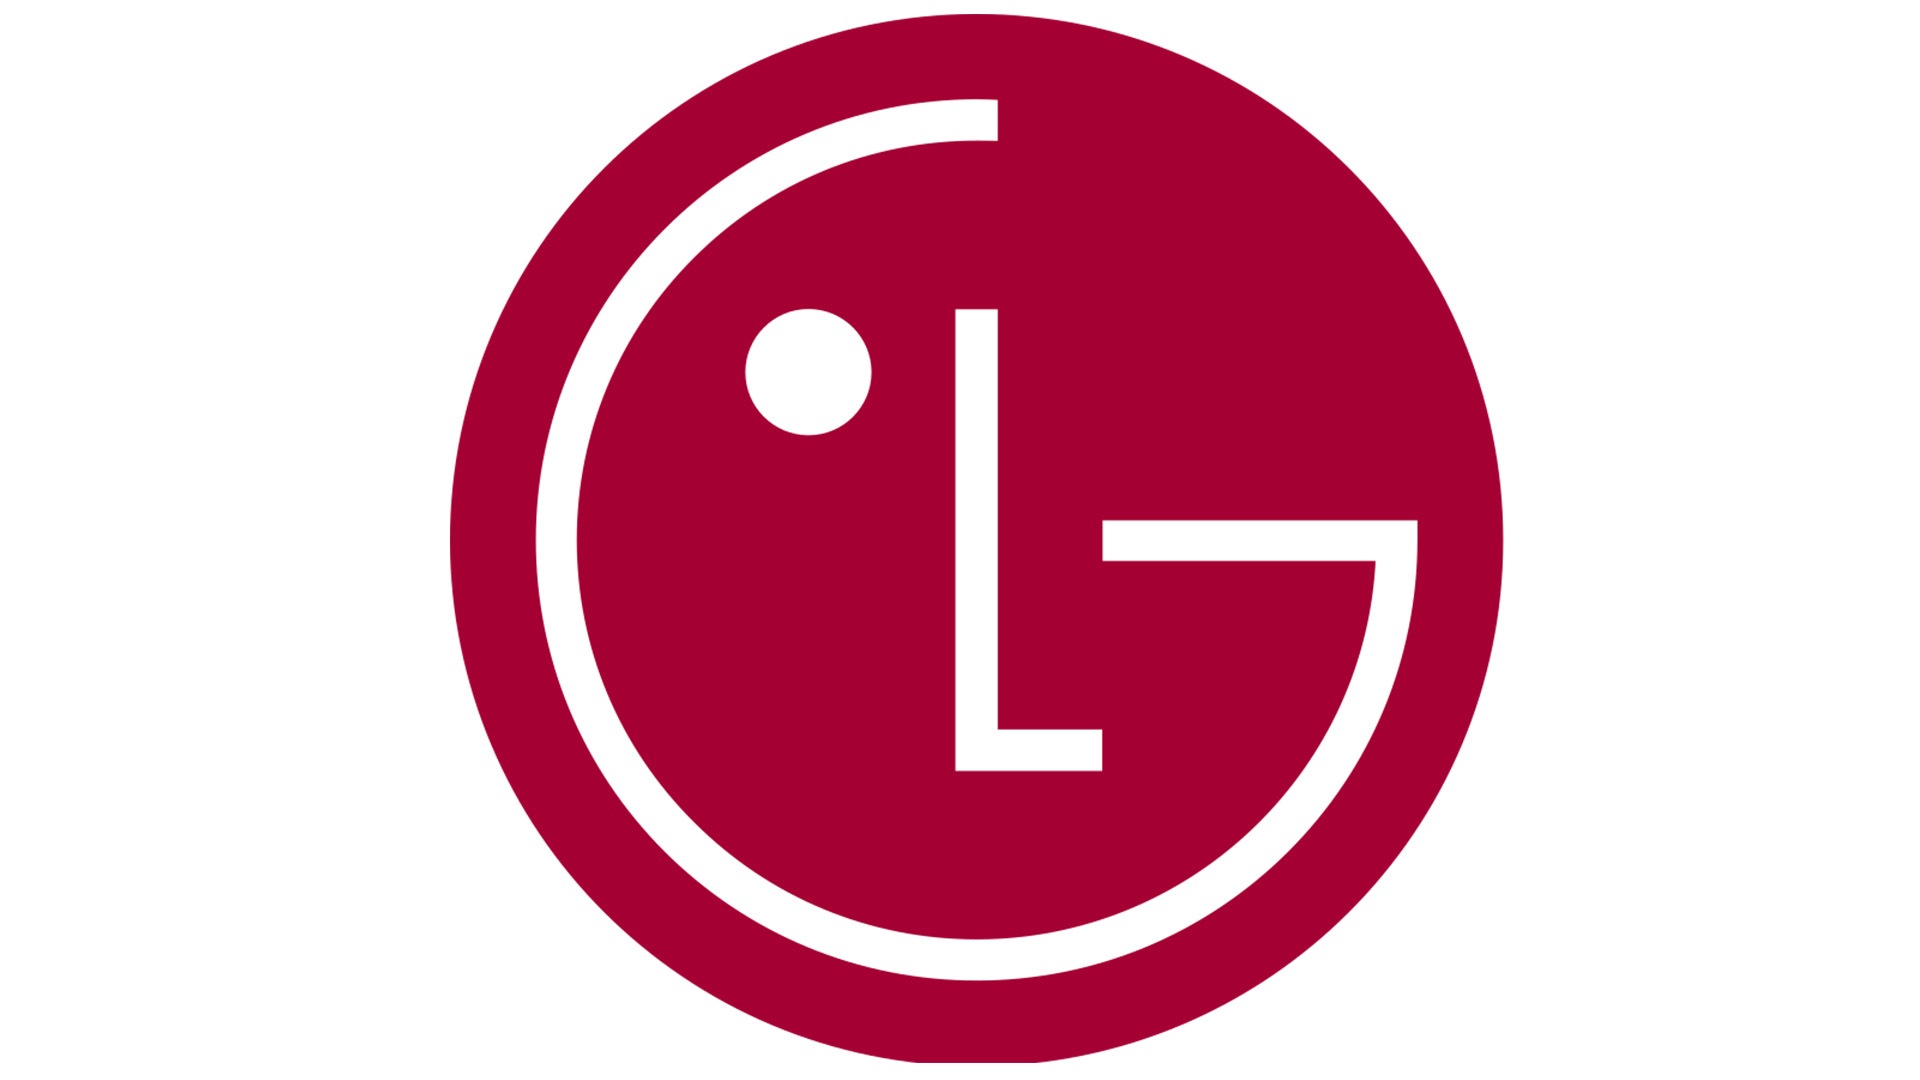 Lg телевизоры логотип. LG Electronics. LG Electronics Inc. LG Electronics логотип. Логотип LG прозрачный.